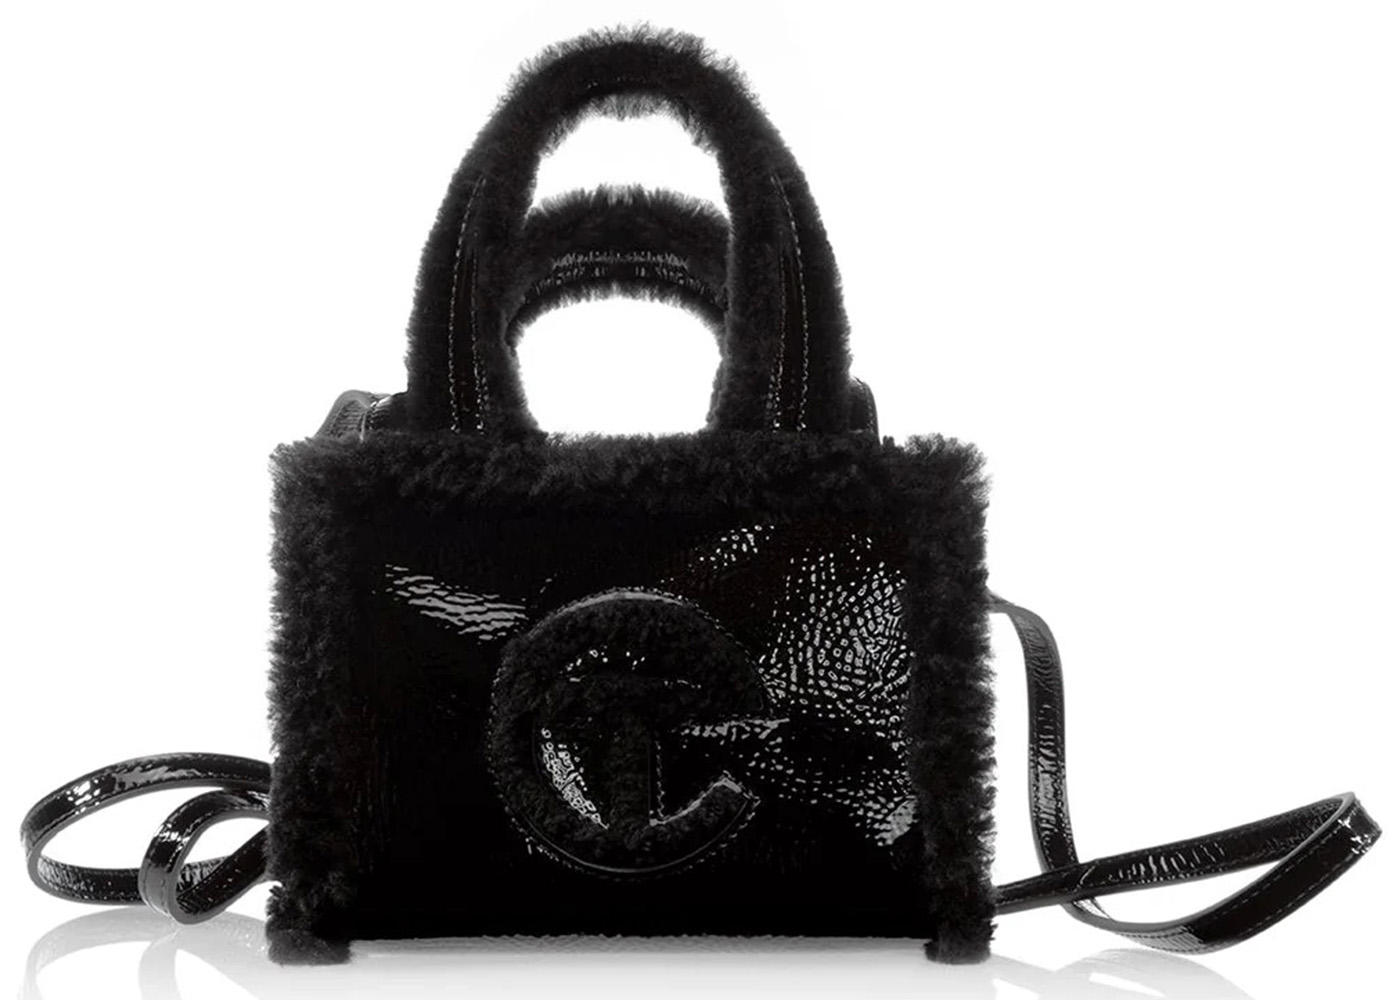 Telfar x UGG Small Shopper Crinkle Black in Crinkle Patent Leather